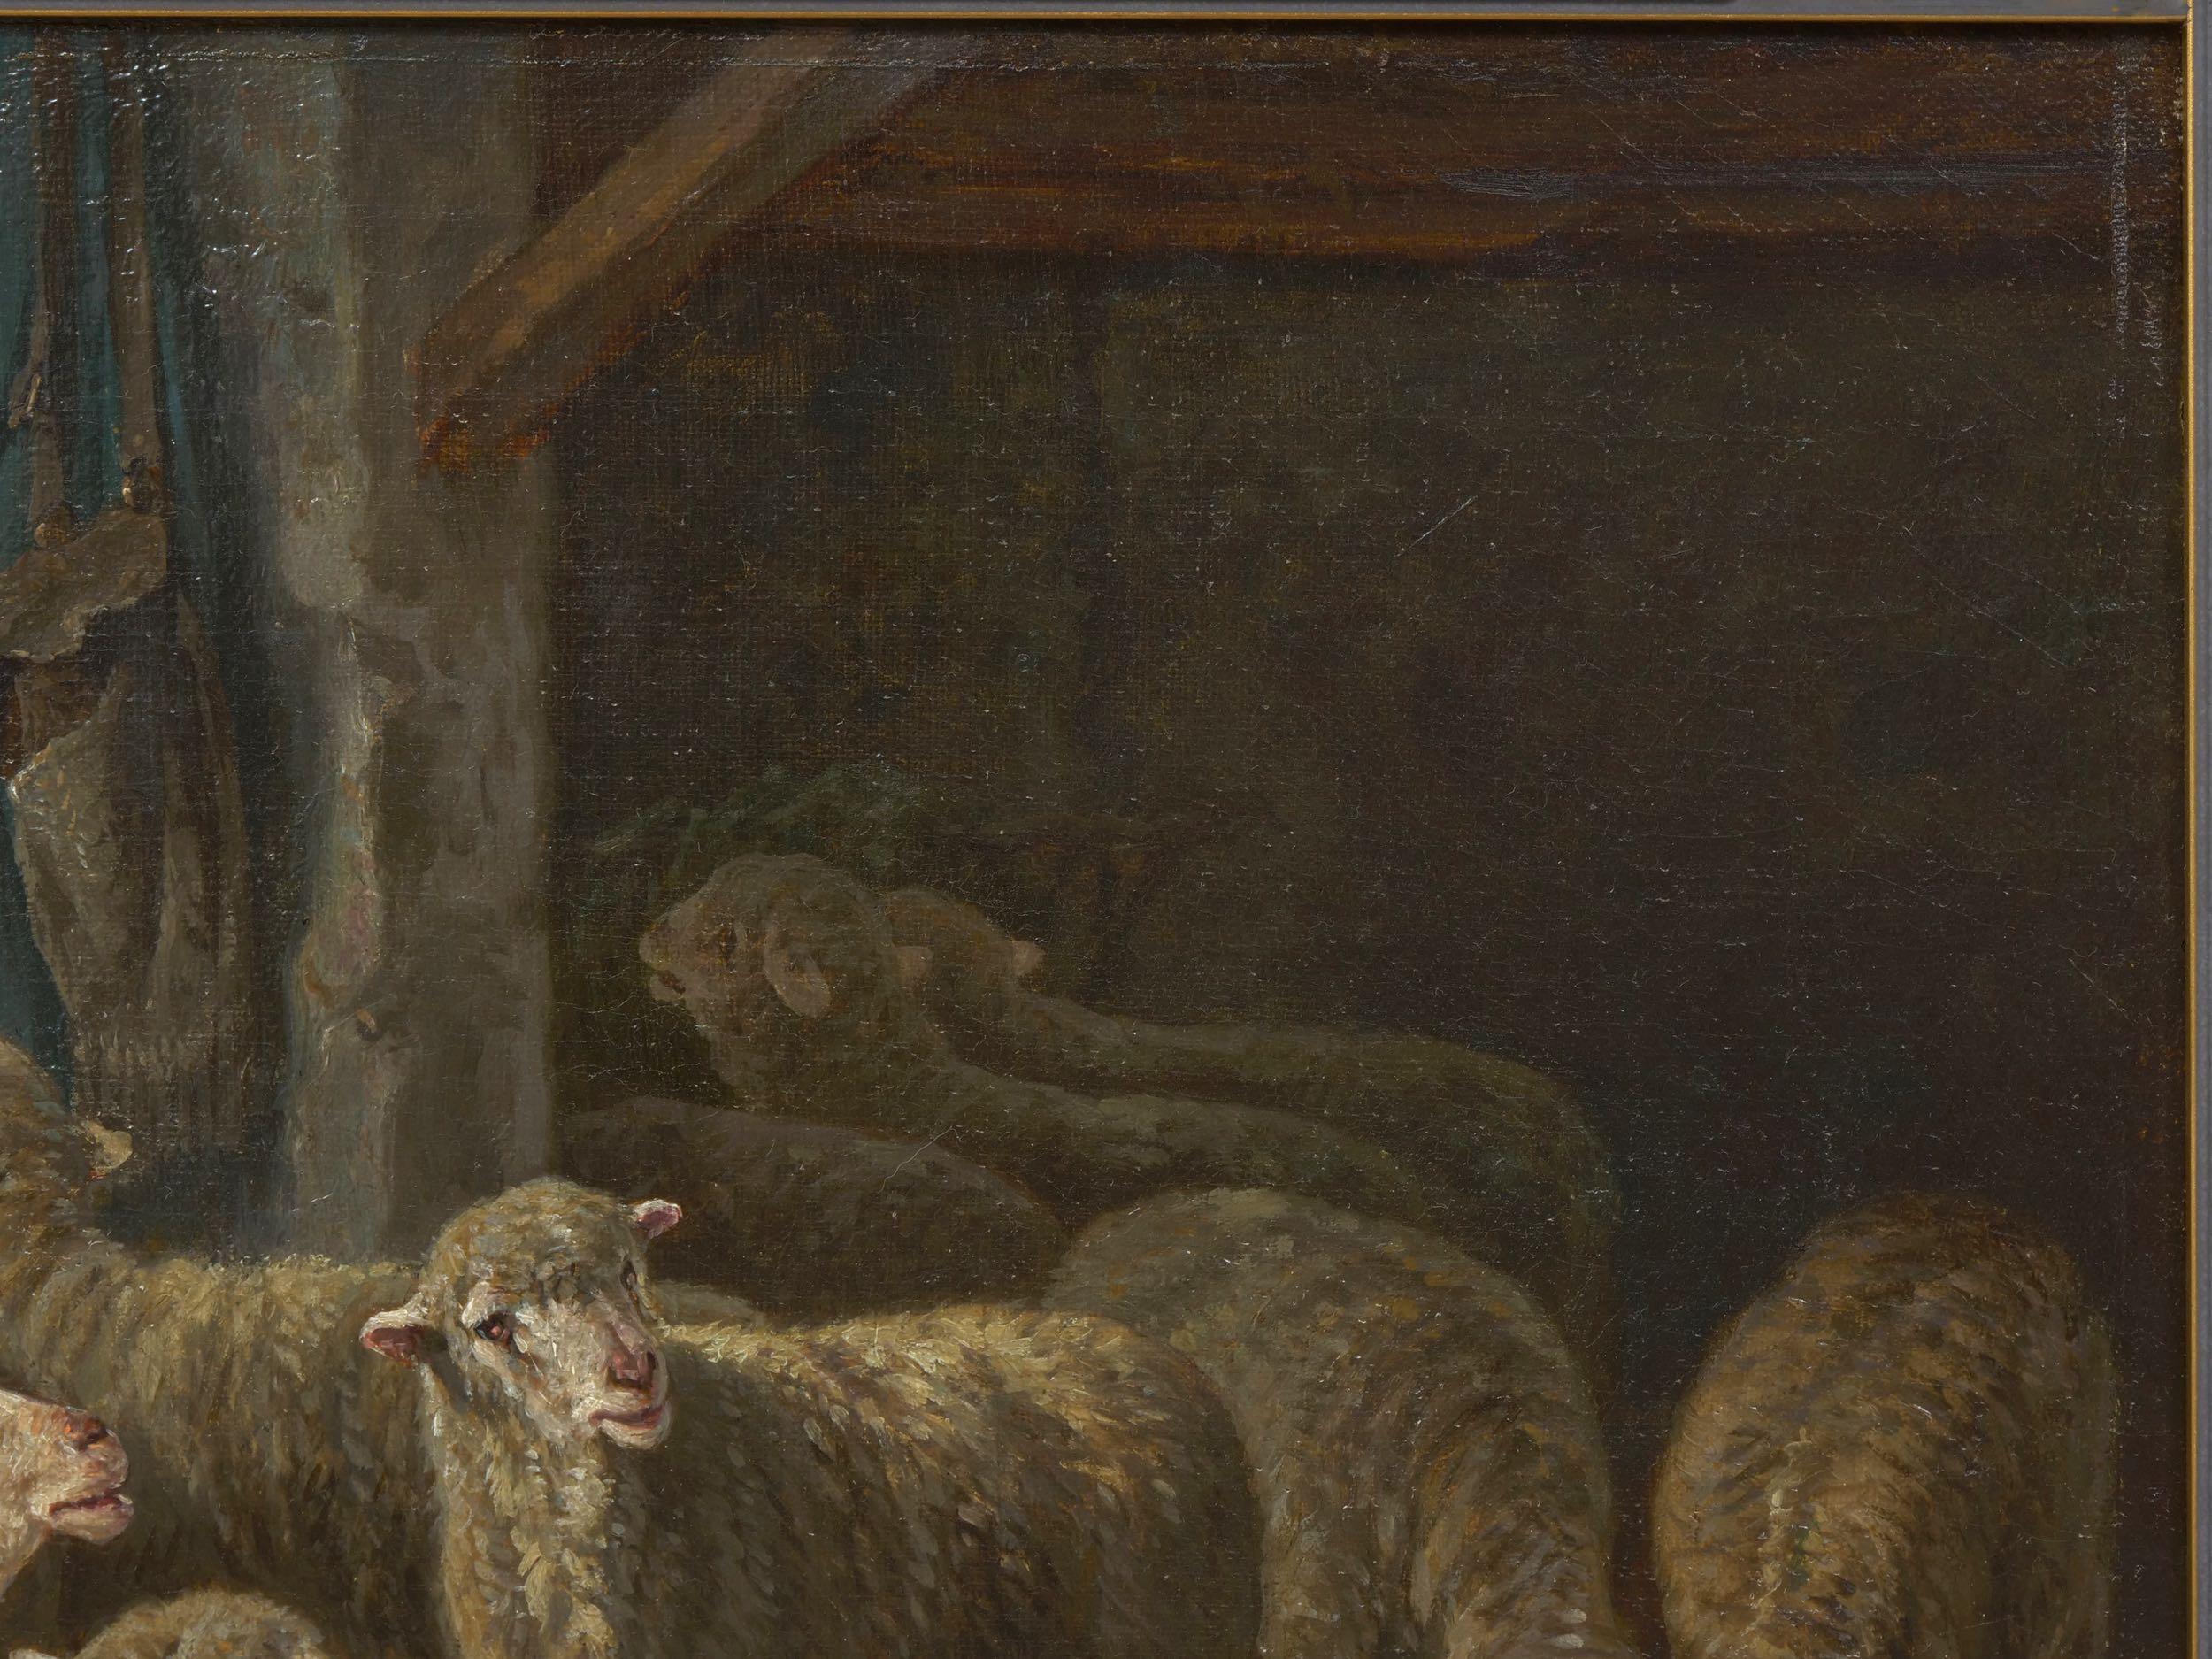 Belgian “Sheep Inside a Barn” French Barbizon Painting by Charles-Ferdinand Ceramano